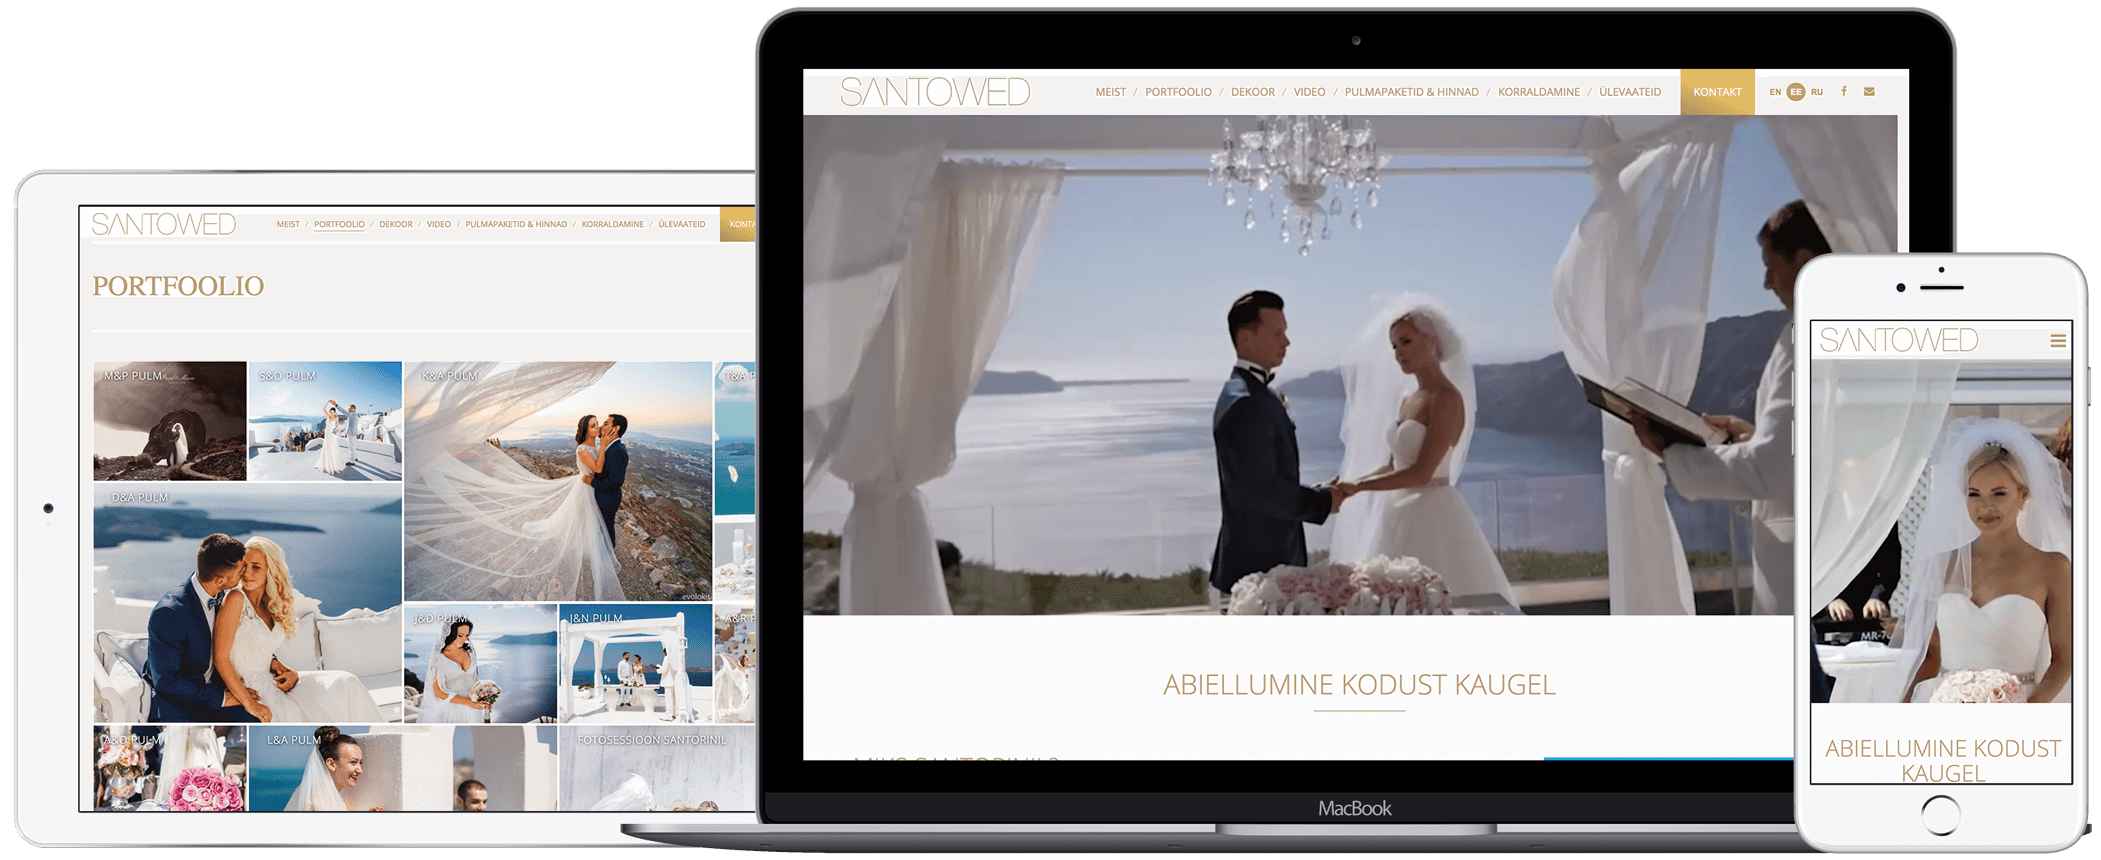 iWeb-designed website for Santowed, a premium wedding agency